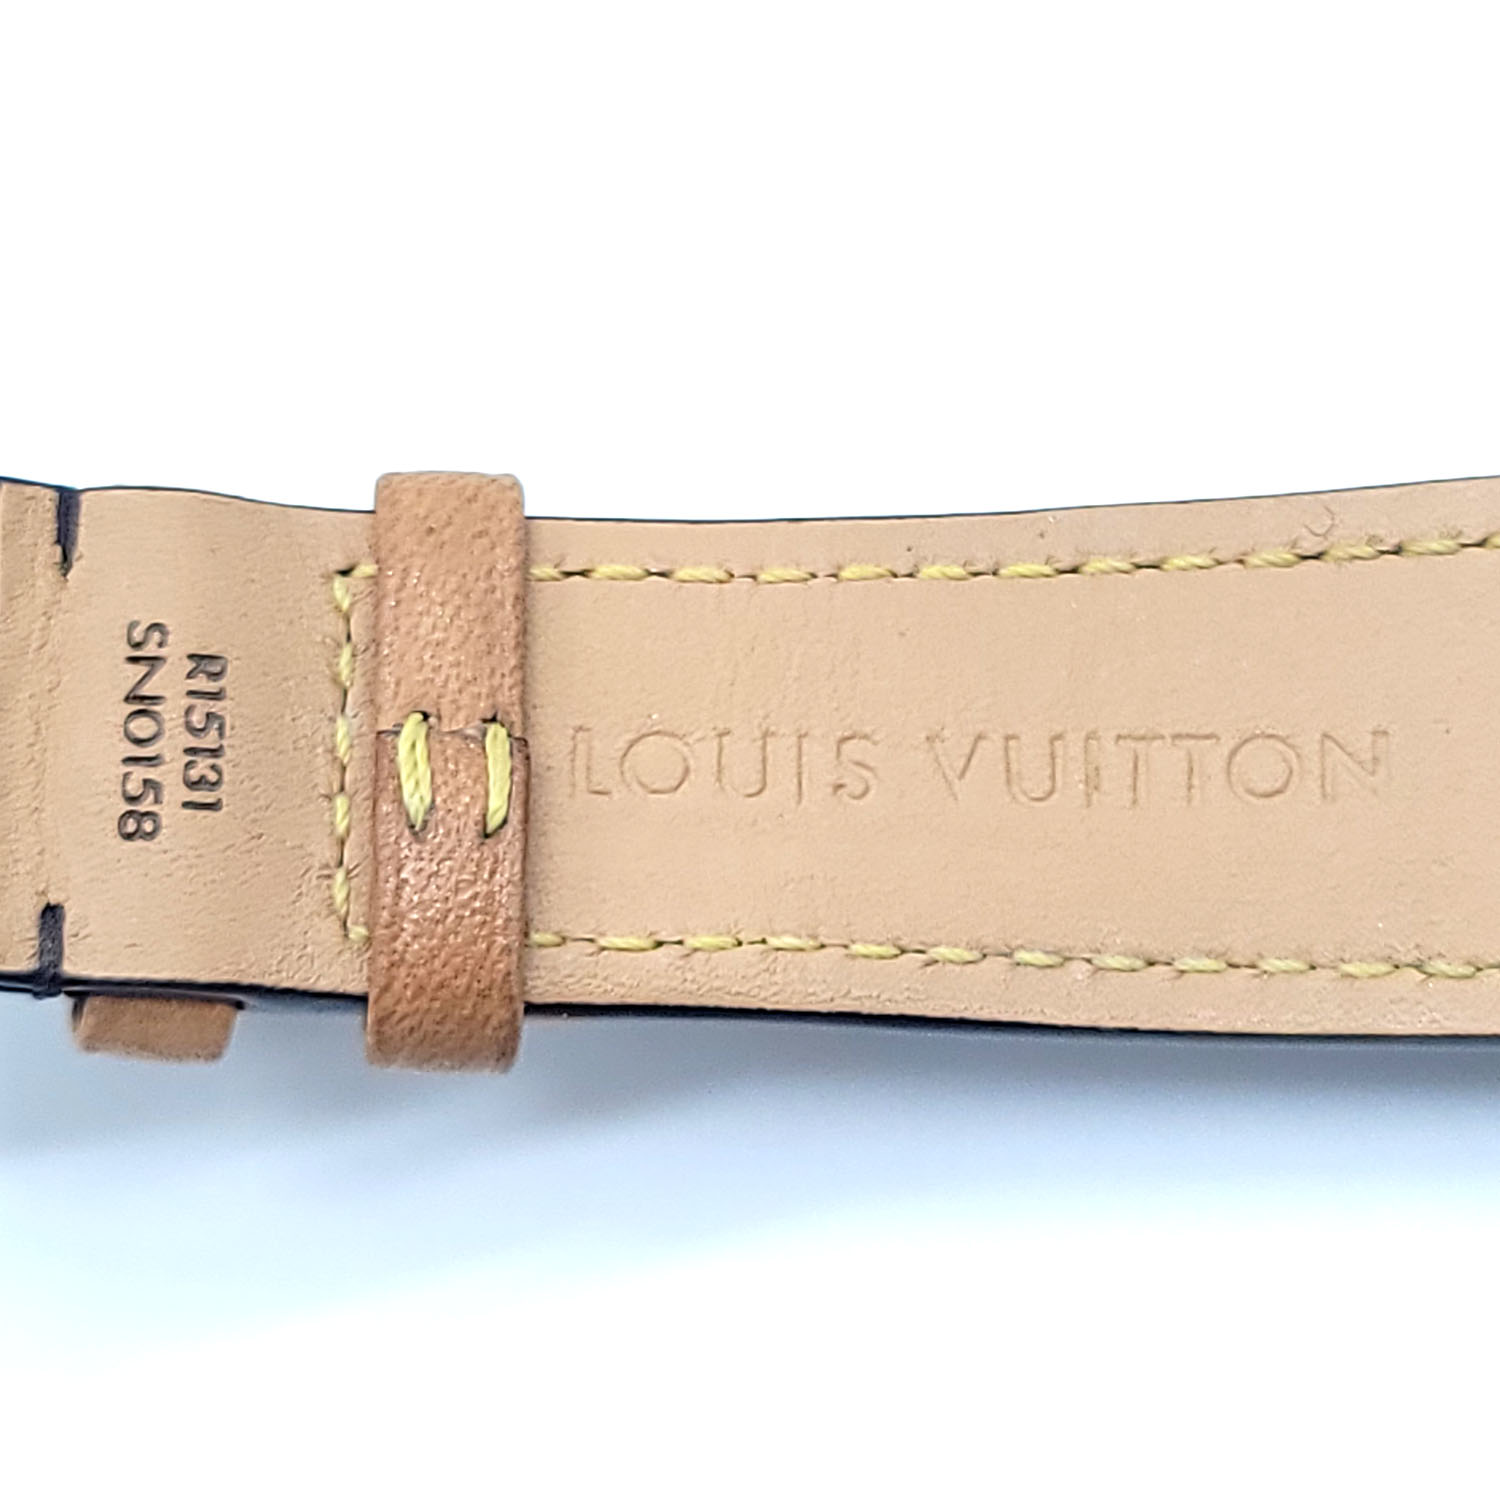 Louis Vuitton Tambour Horizon Monogram Eclipse – The Watch Pages